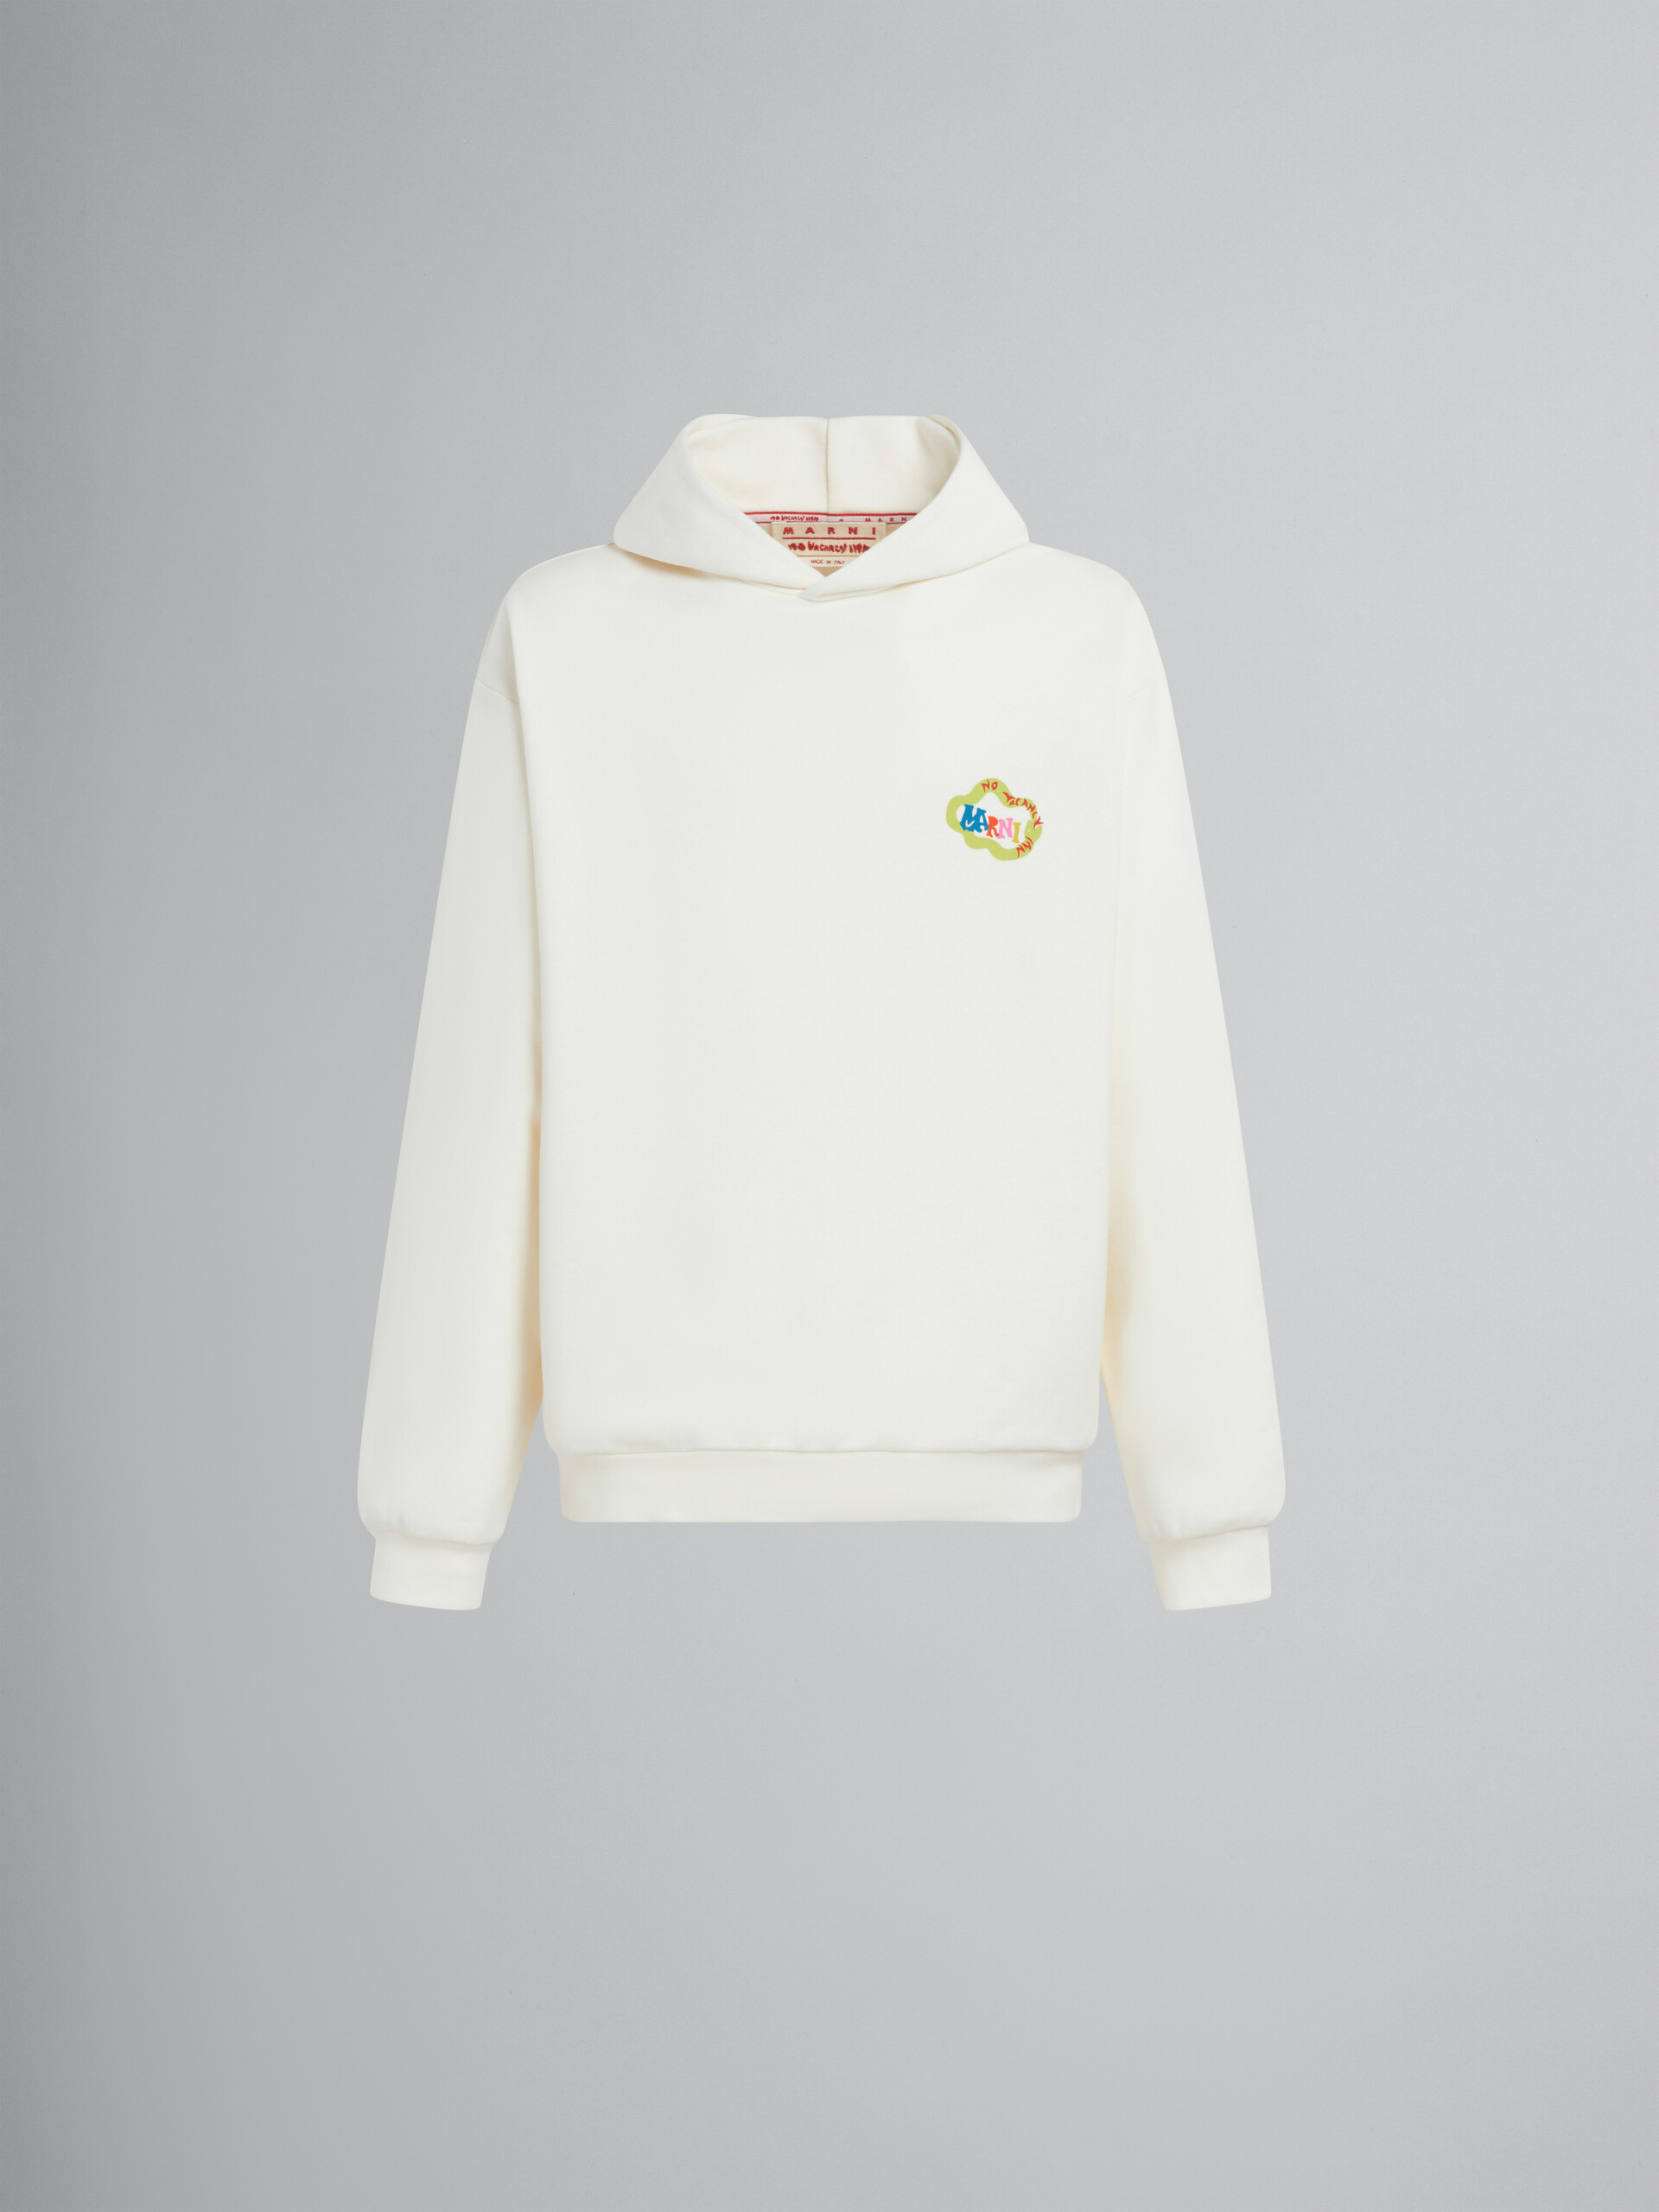 Marni x No Vacancy Inn - White sweatshirt in bio cotton jersey with snake logo print - Sweaters - Image 1